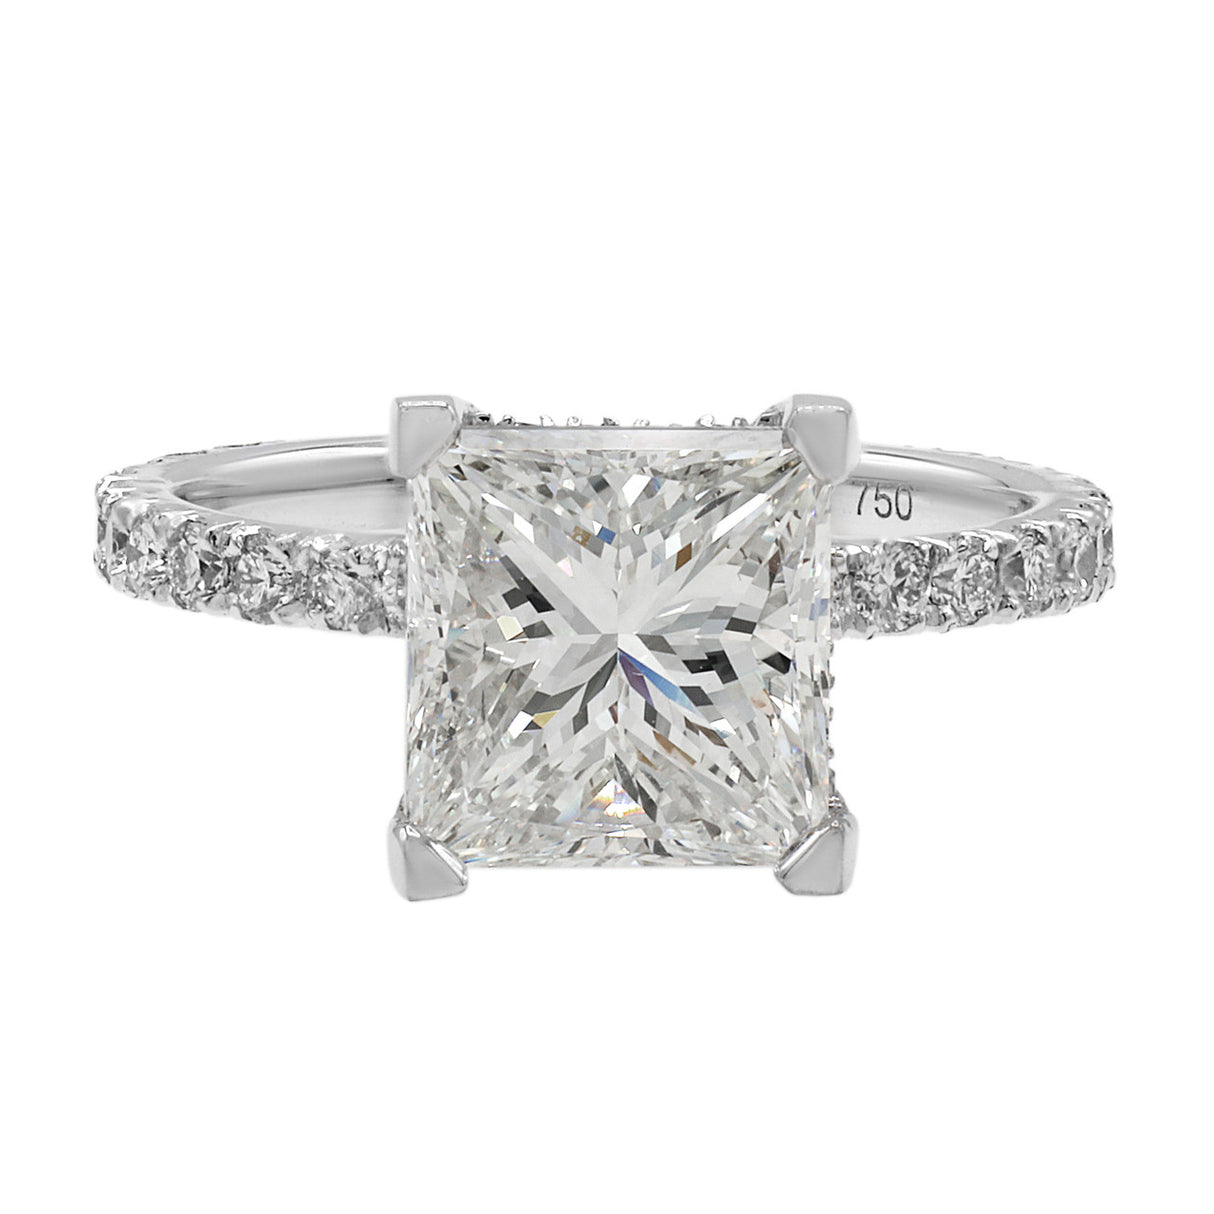 18K White Gold 3.01 Carat Princess Cut Diamond Ring